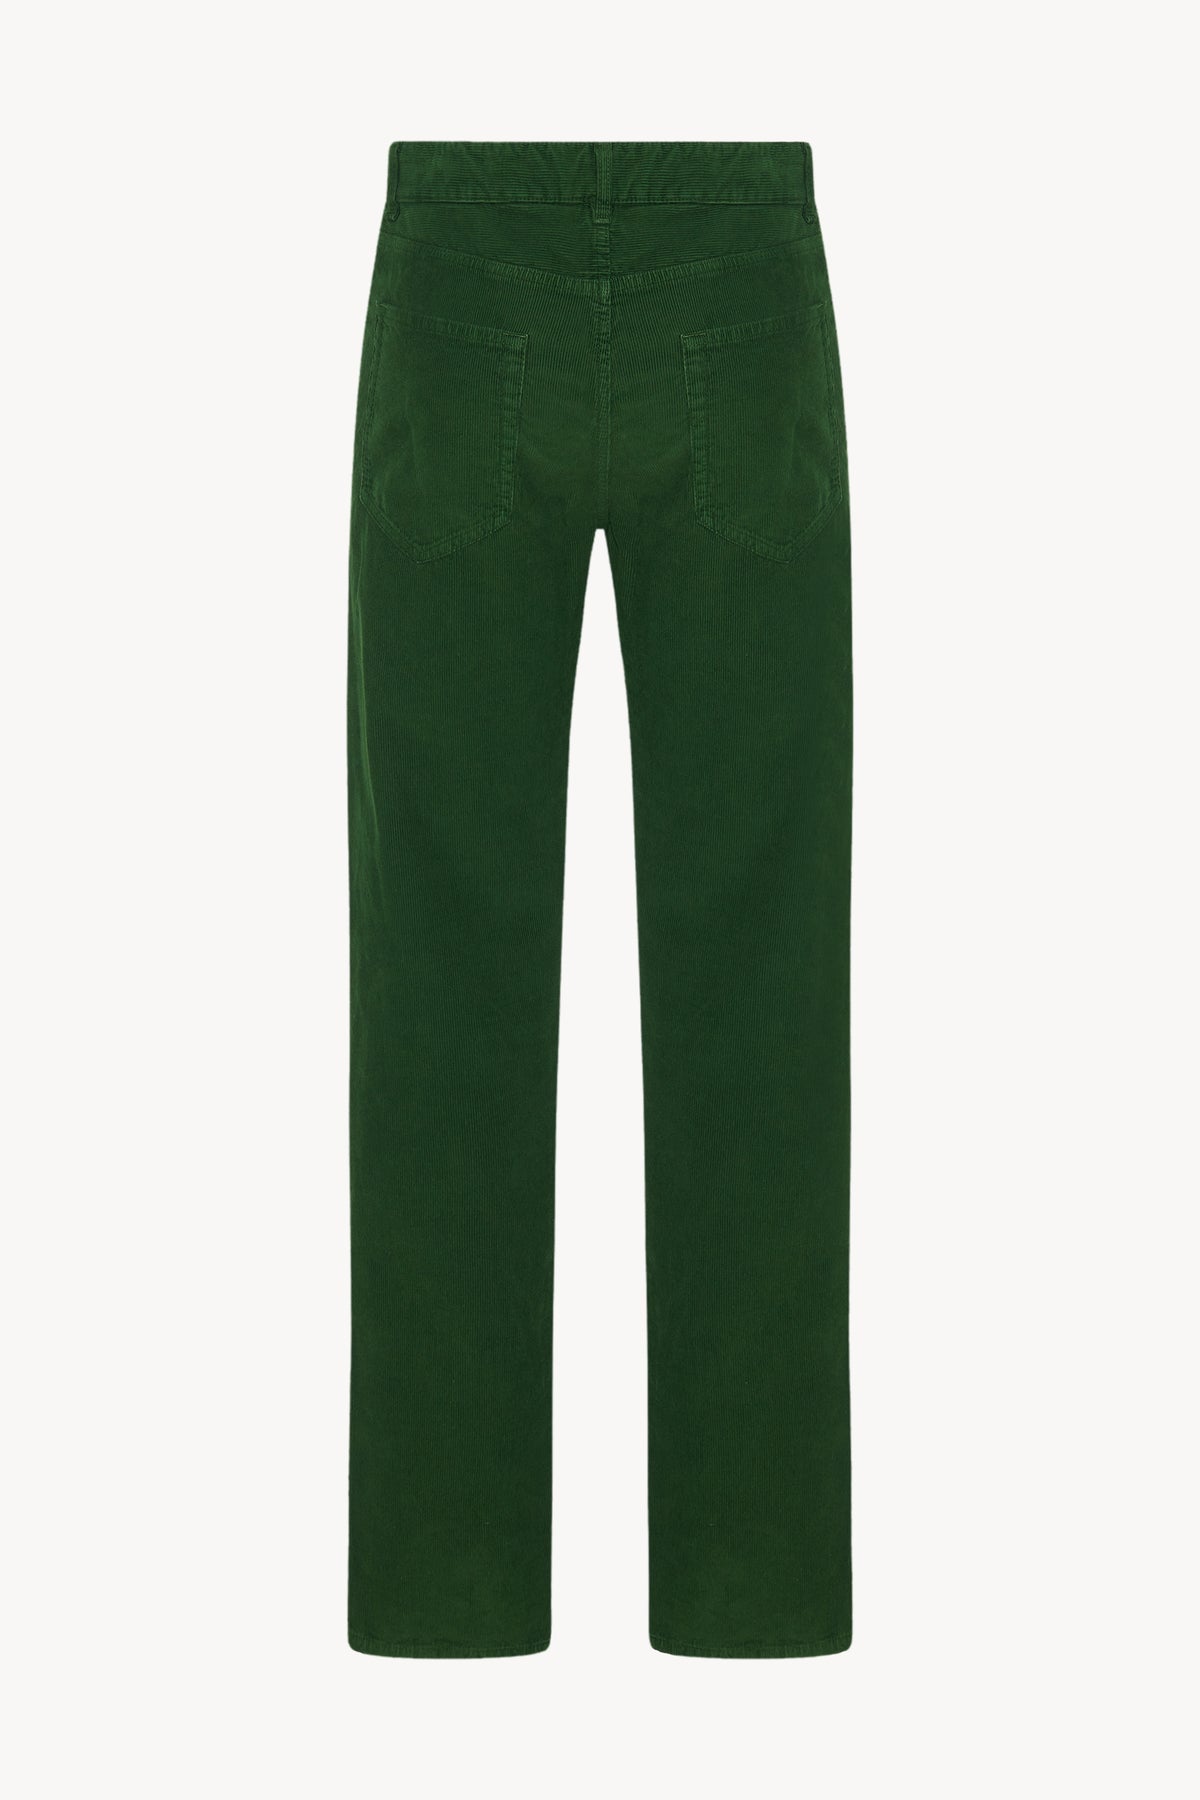 green corduroy pants | 14 Shades Of Grey